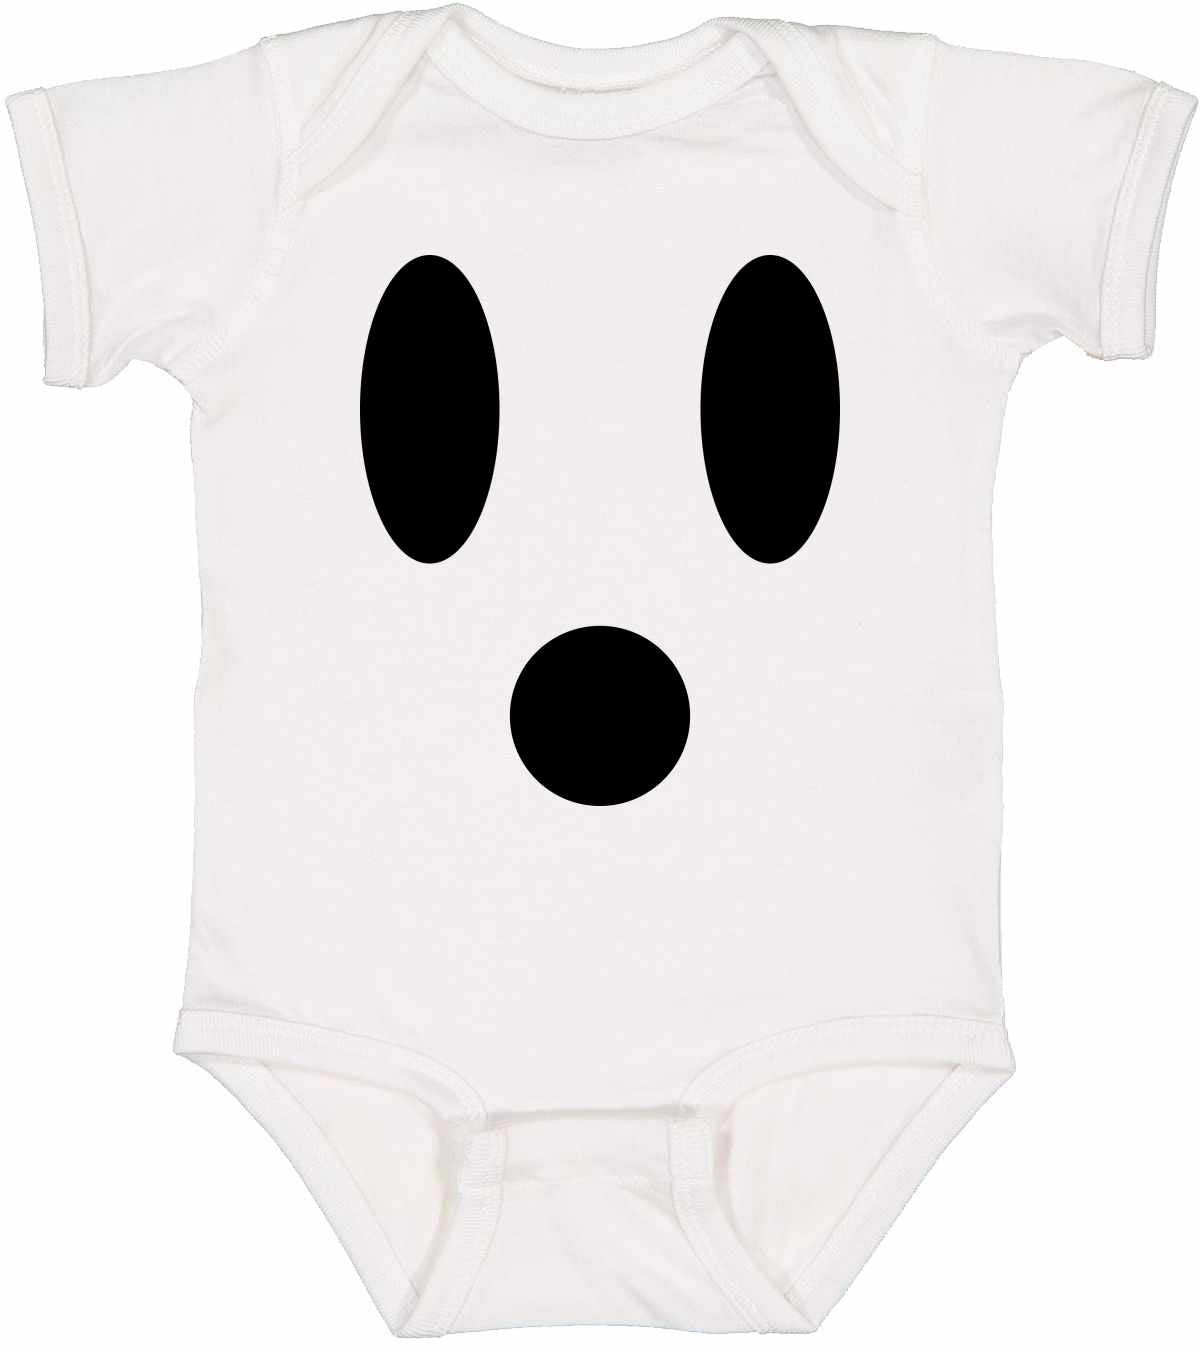 Ghost Face on Infant BodySuit